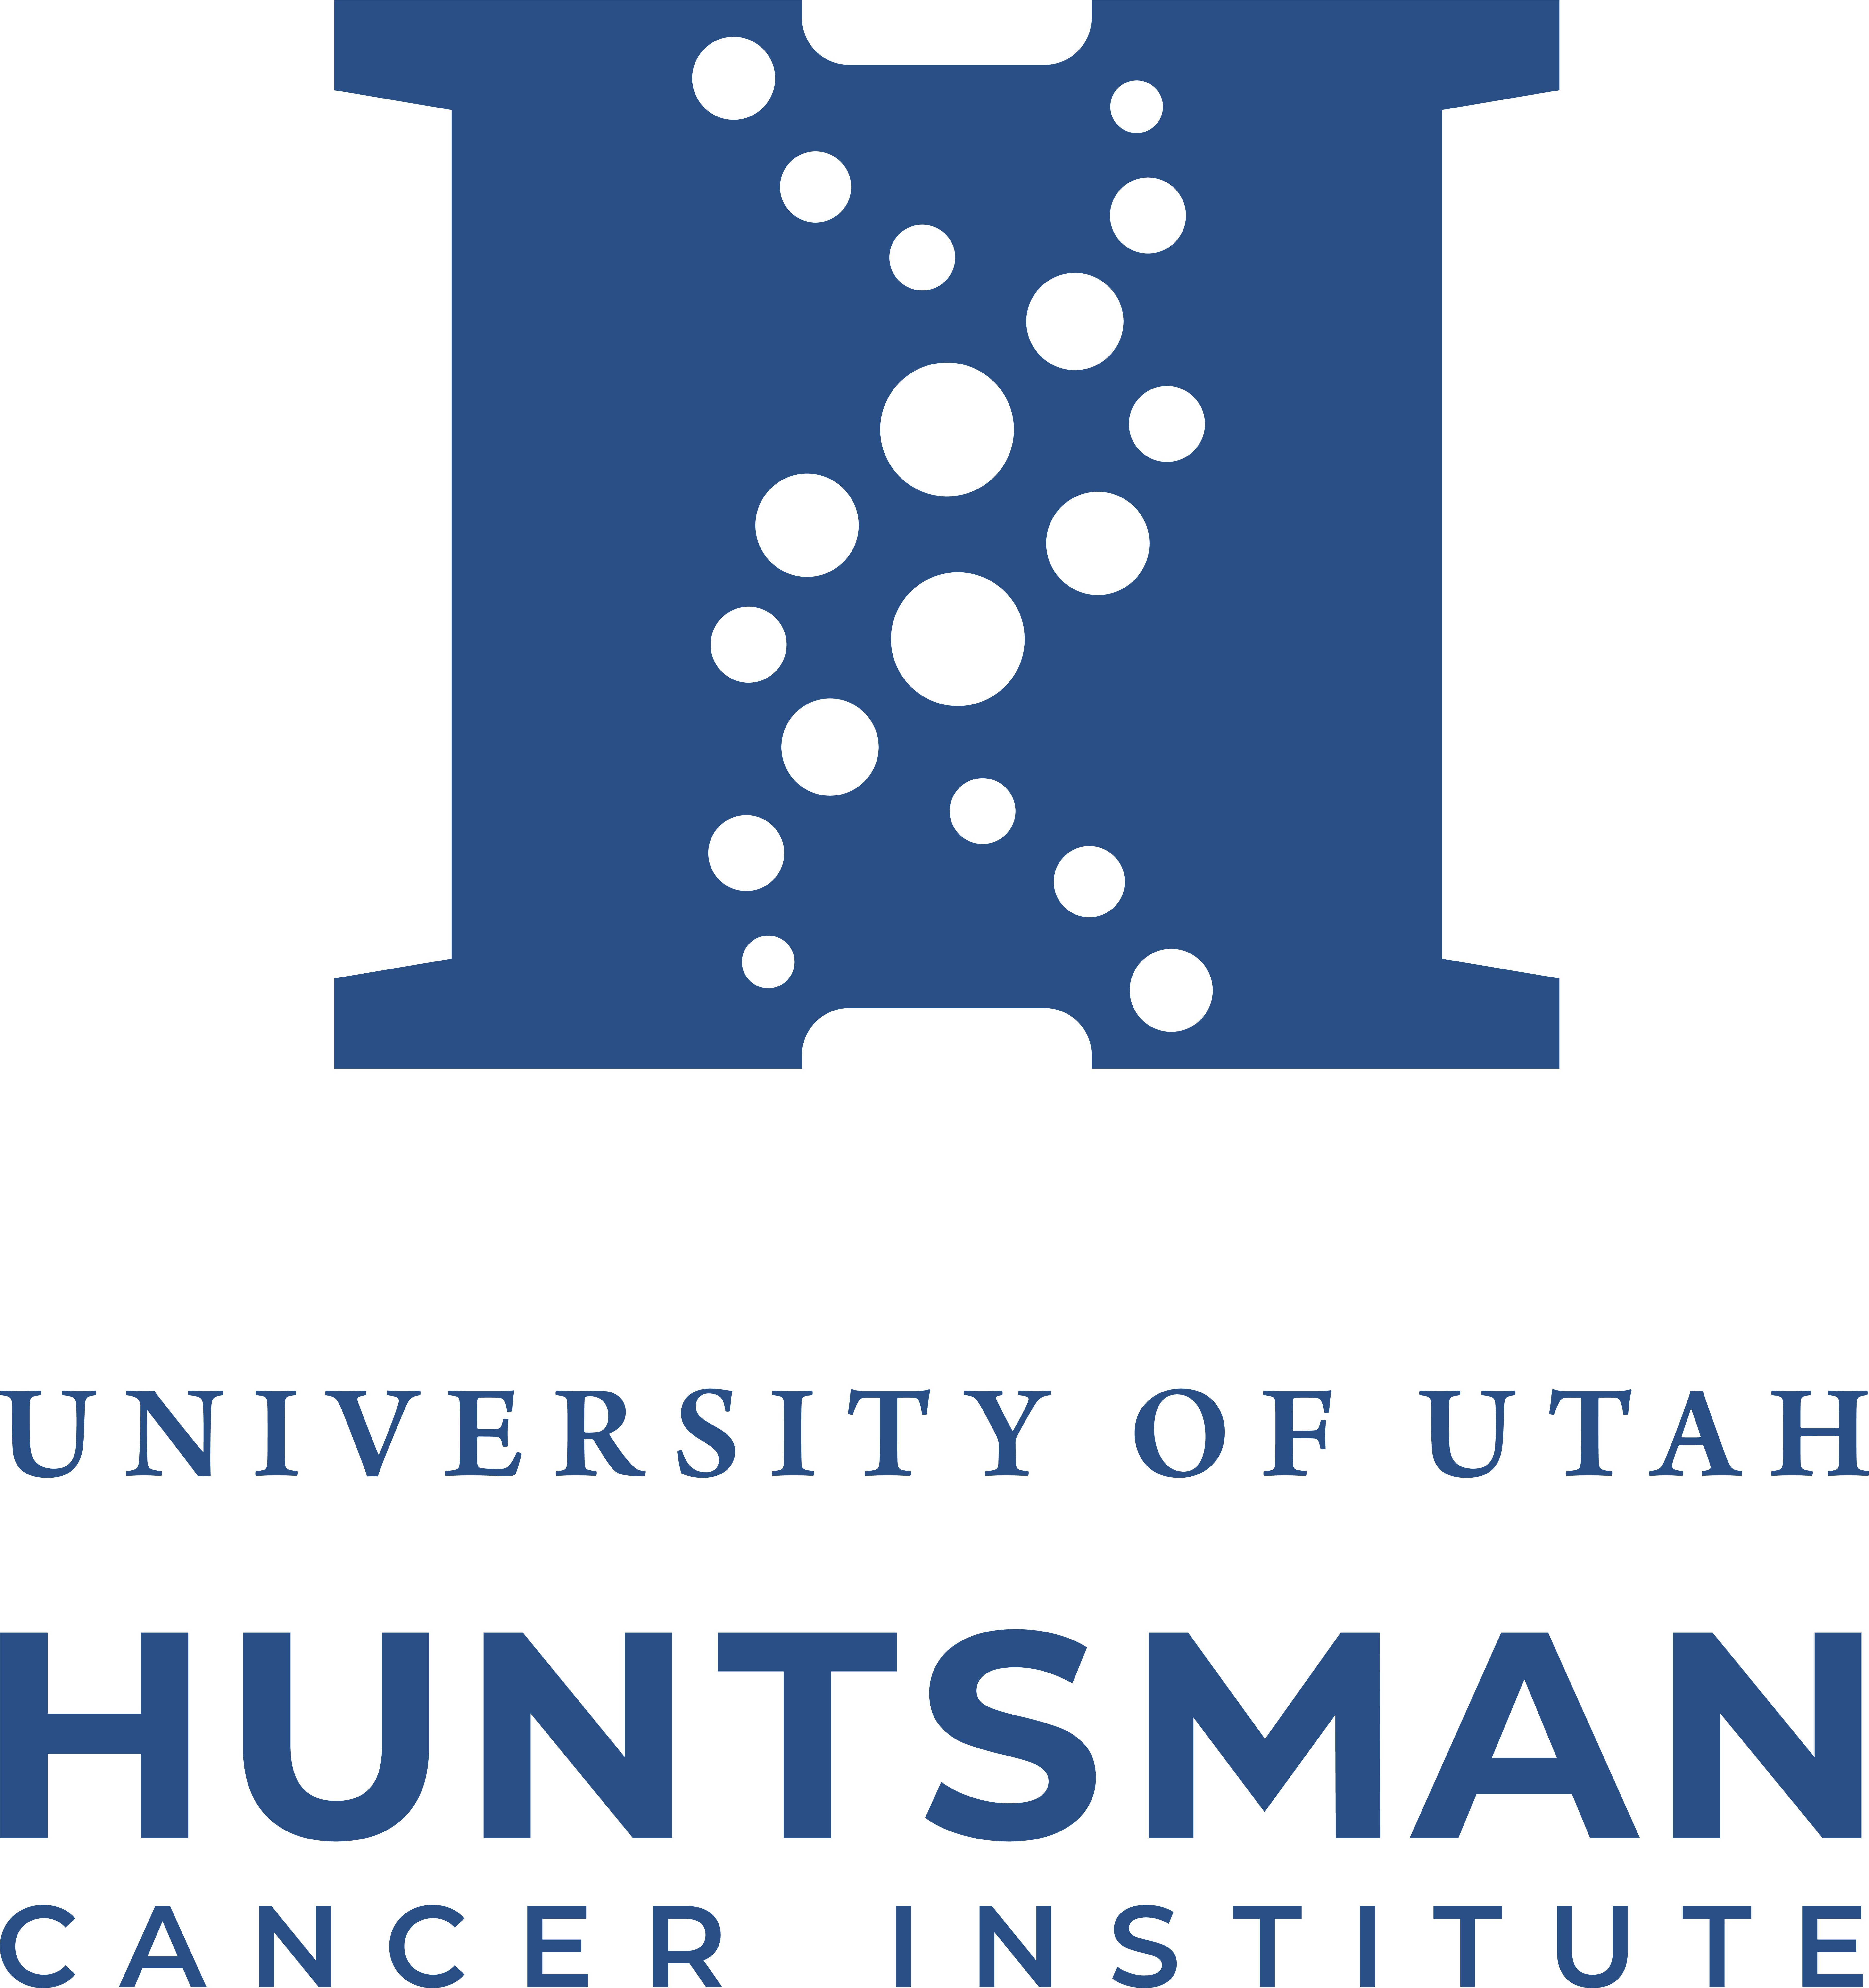 Huntsman Cancer Institute at the University of Utah 